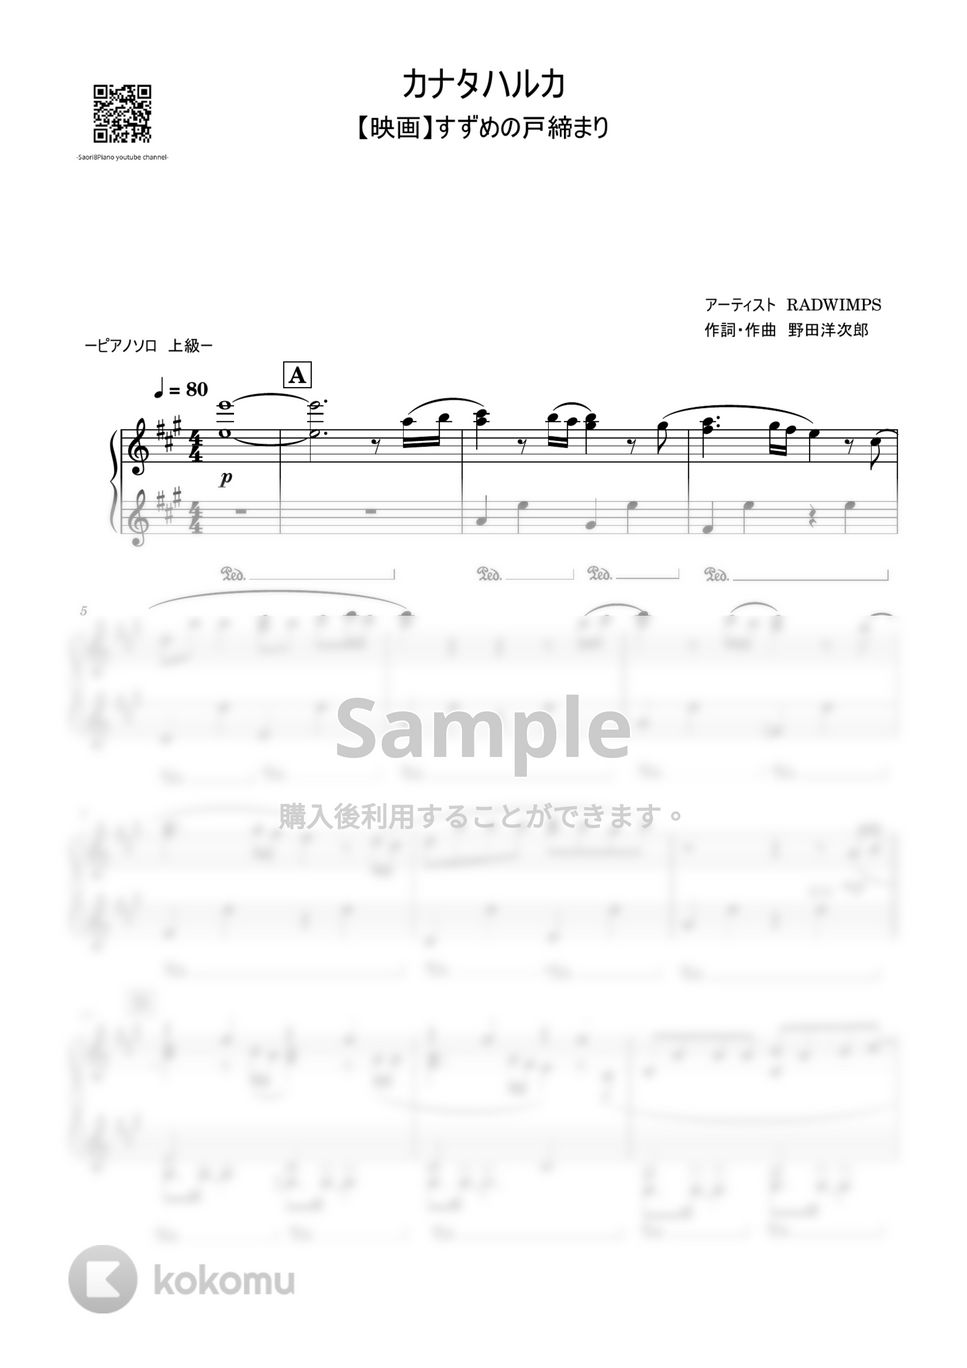 RADWIMPS - カナタハルカ (すずめの戸締まり/上級レベル) by Saori8Piano